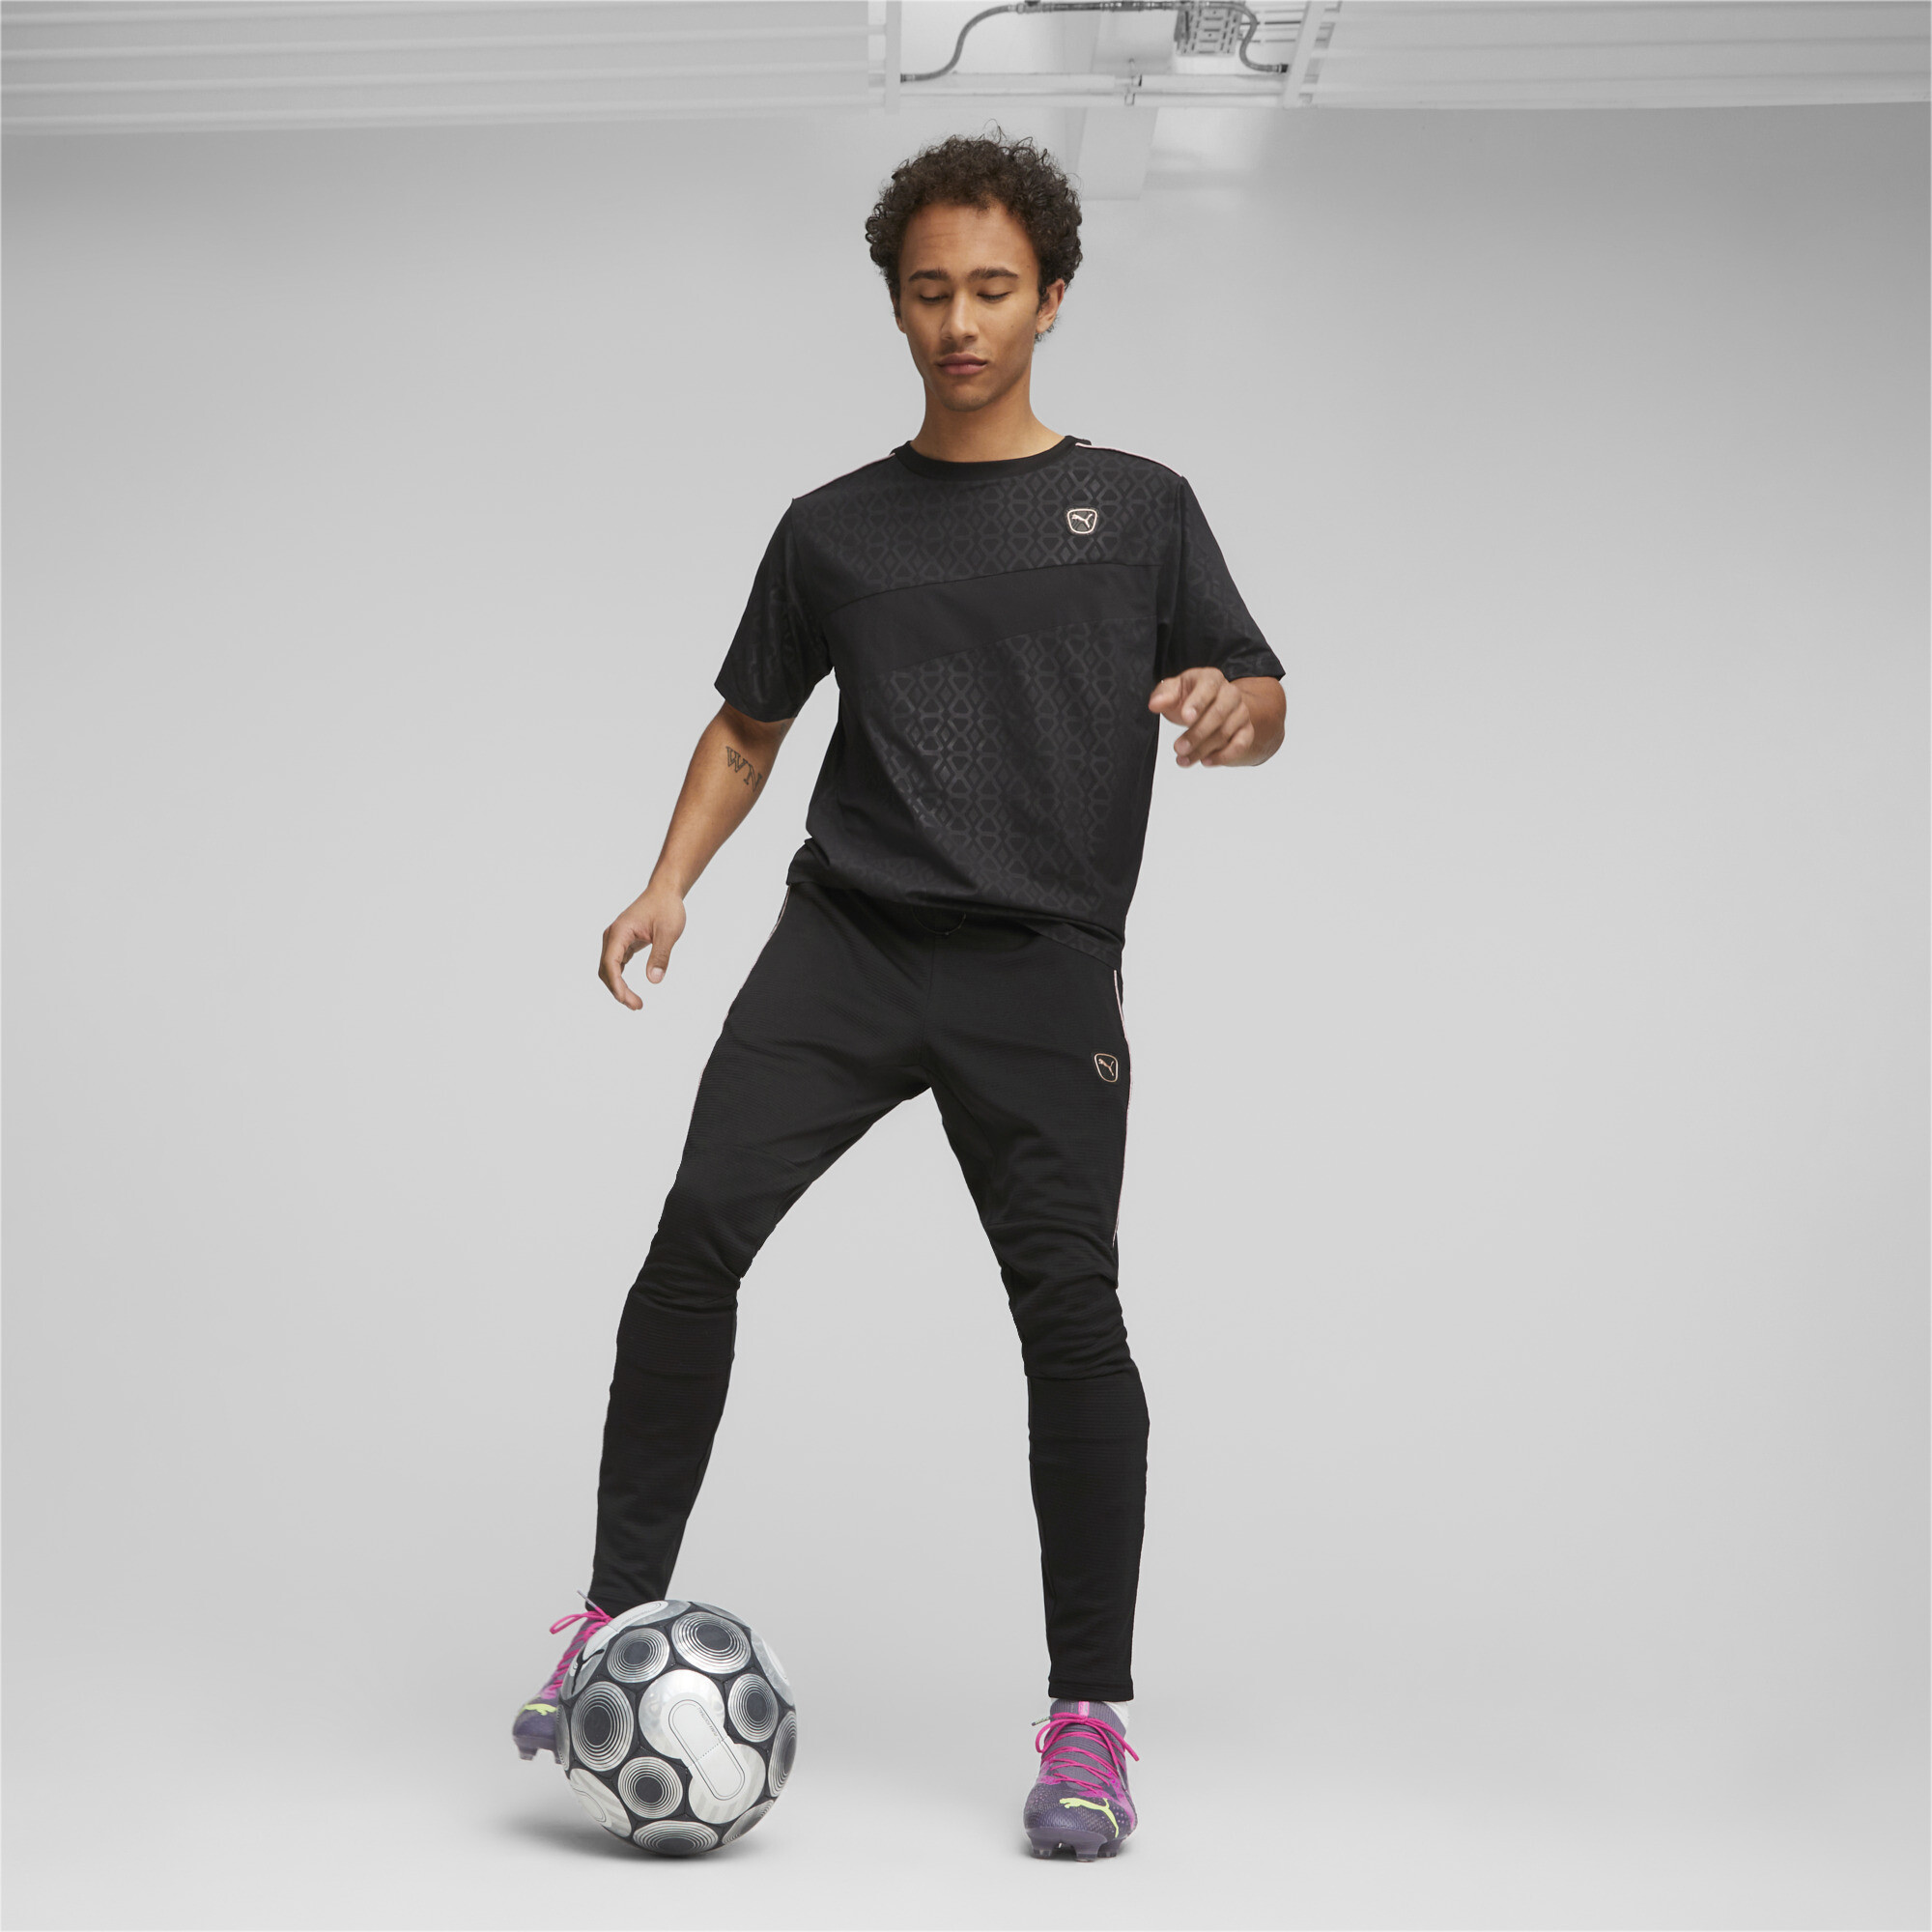 Puma FUTURE ULTIMATE FG/AG Goalkeeper Football Boots, Purple, Size 44.5, Shoes